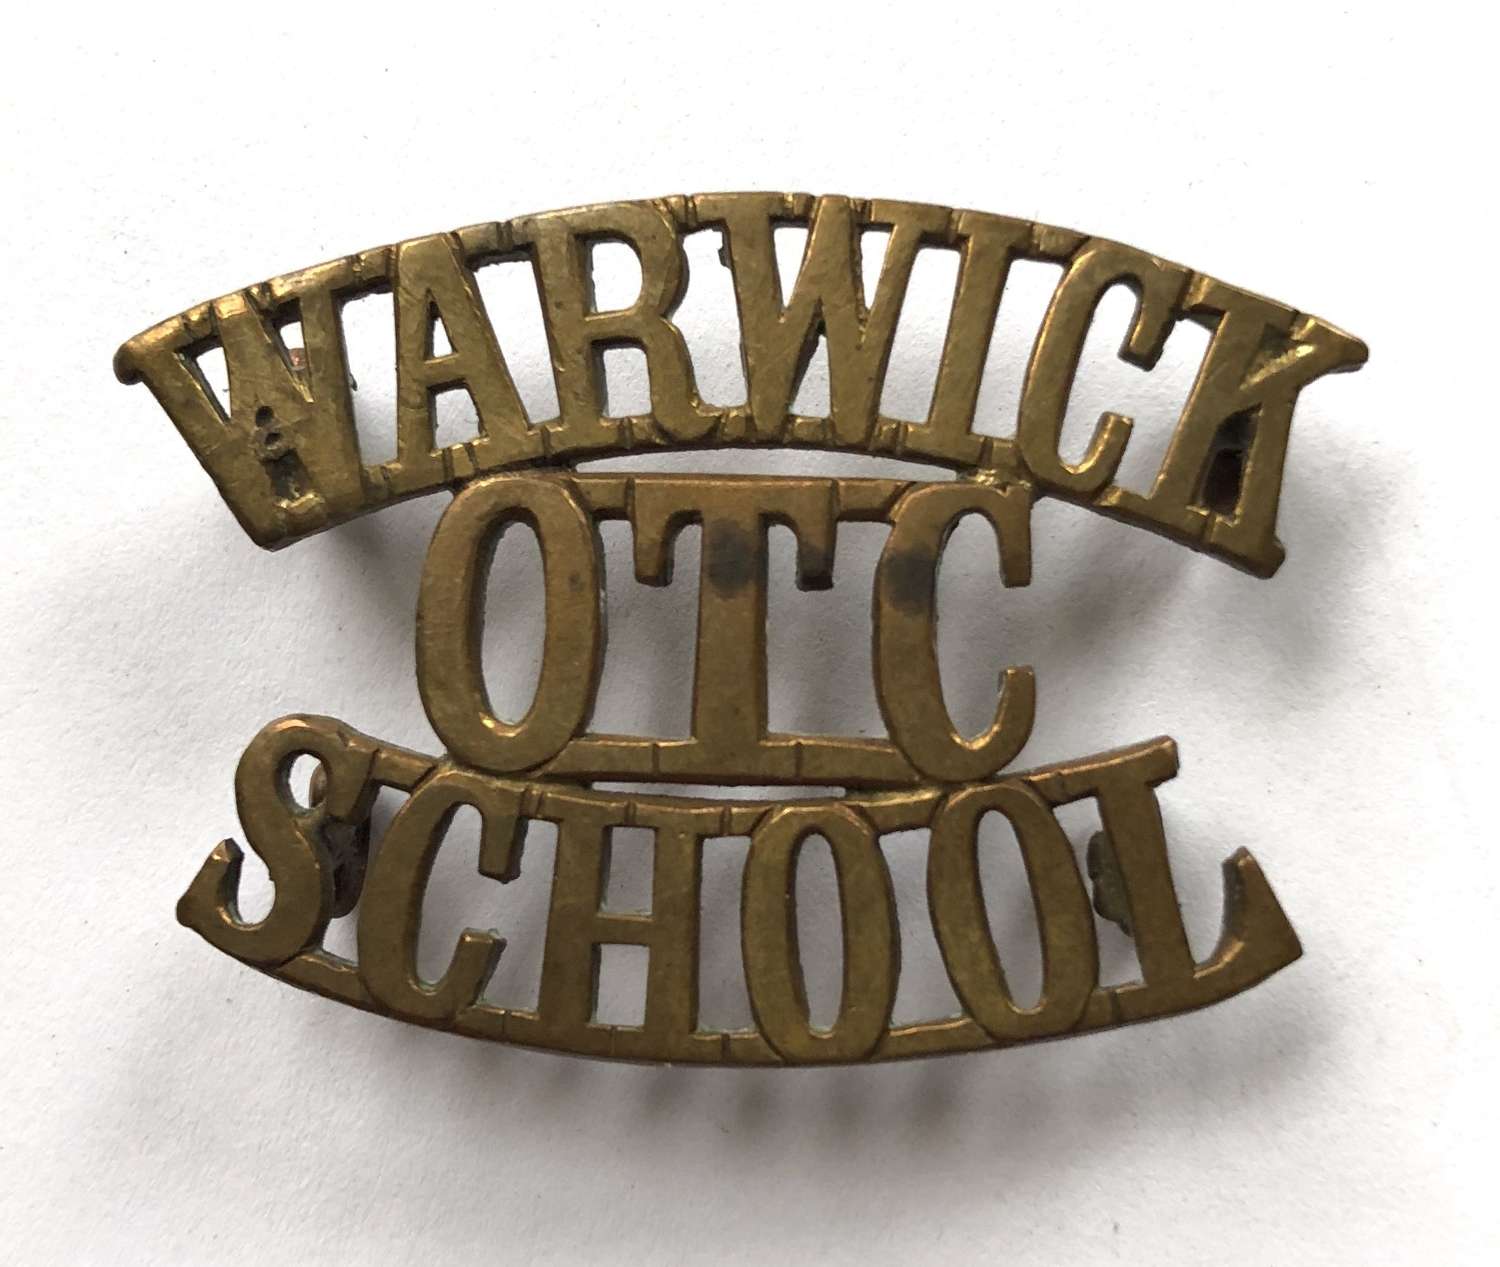 WARWICK / OTC / SCHOOL shoulder title c1908-40